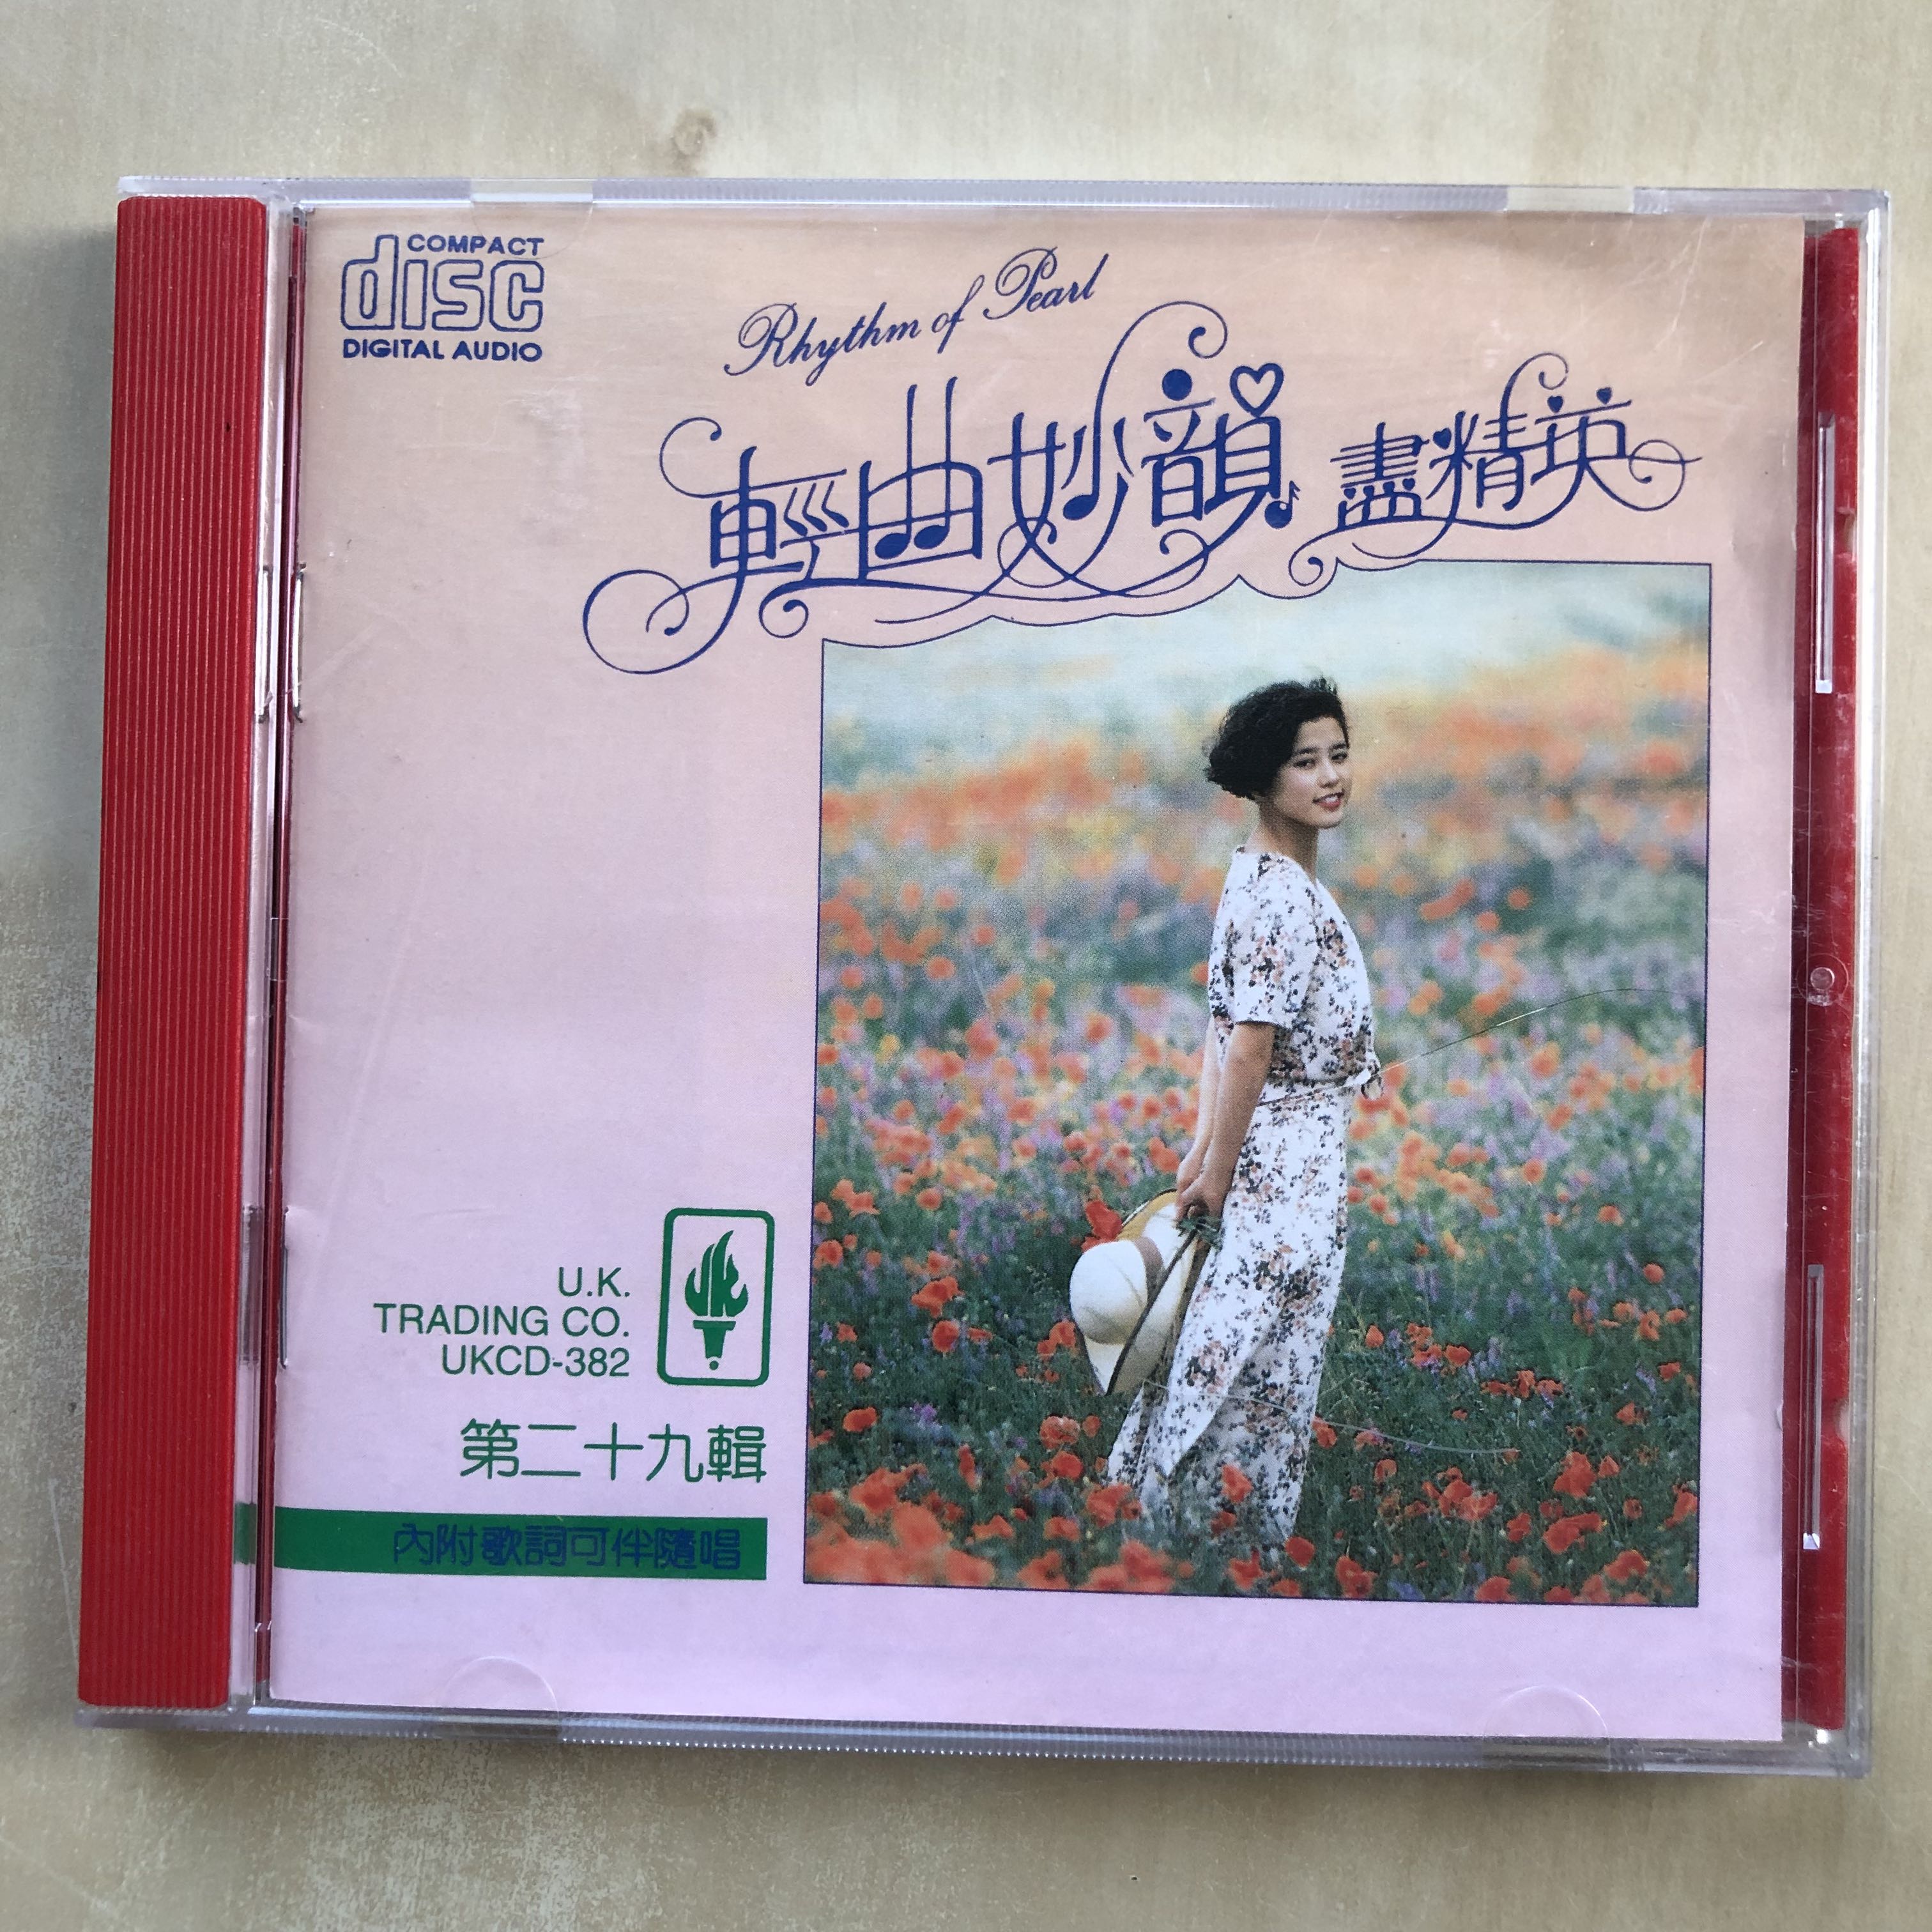 CD丨輕曲妙韻盡精英/ Rhythm of Pearl 第二十九輯, 興趣及遊戲, 音樂 